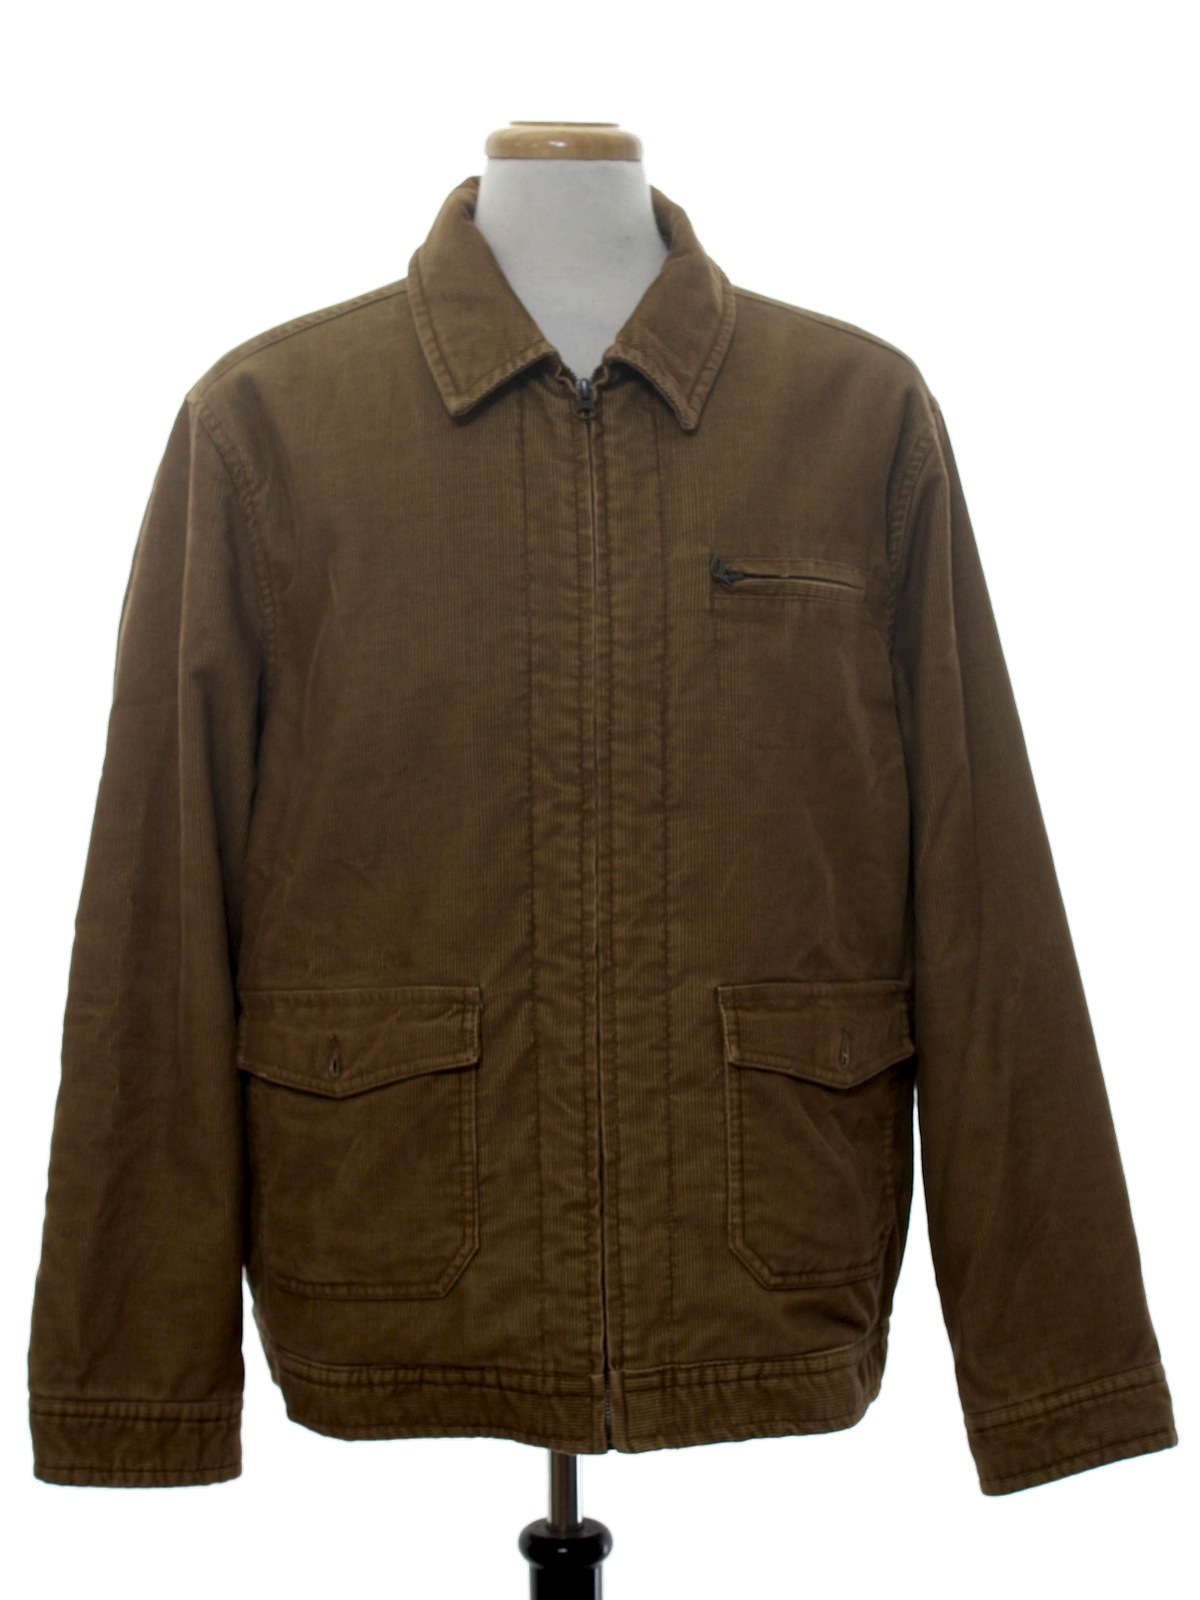 Retro Nineties Jacket: 90s -Mossimo- Mens light brown pinwale cotton ...